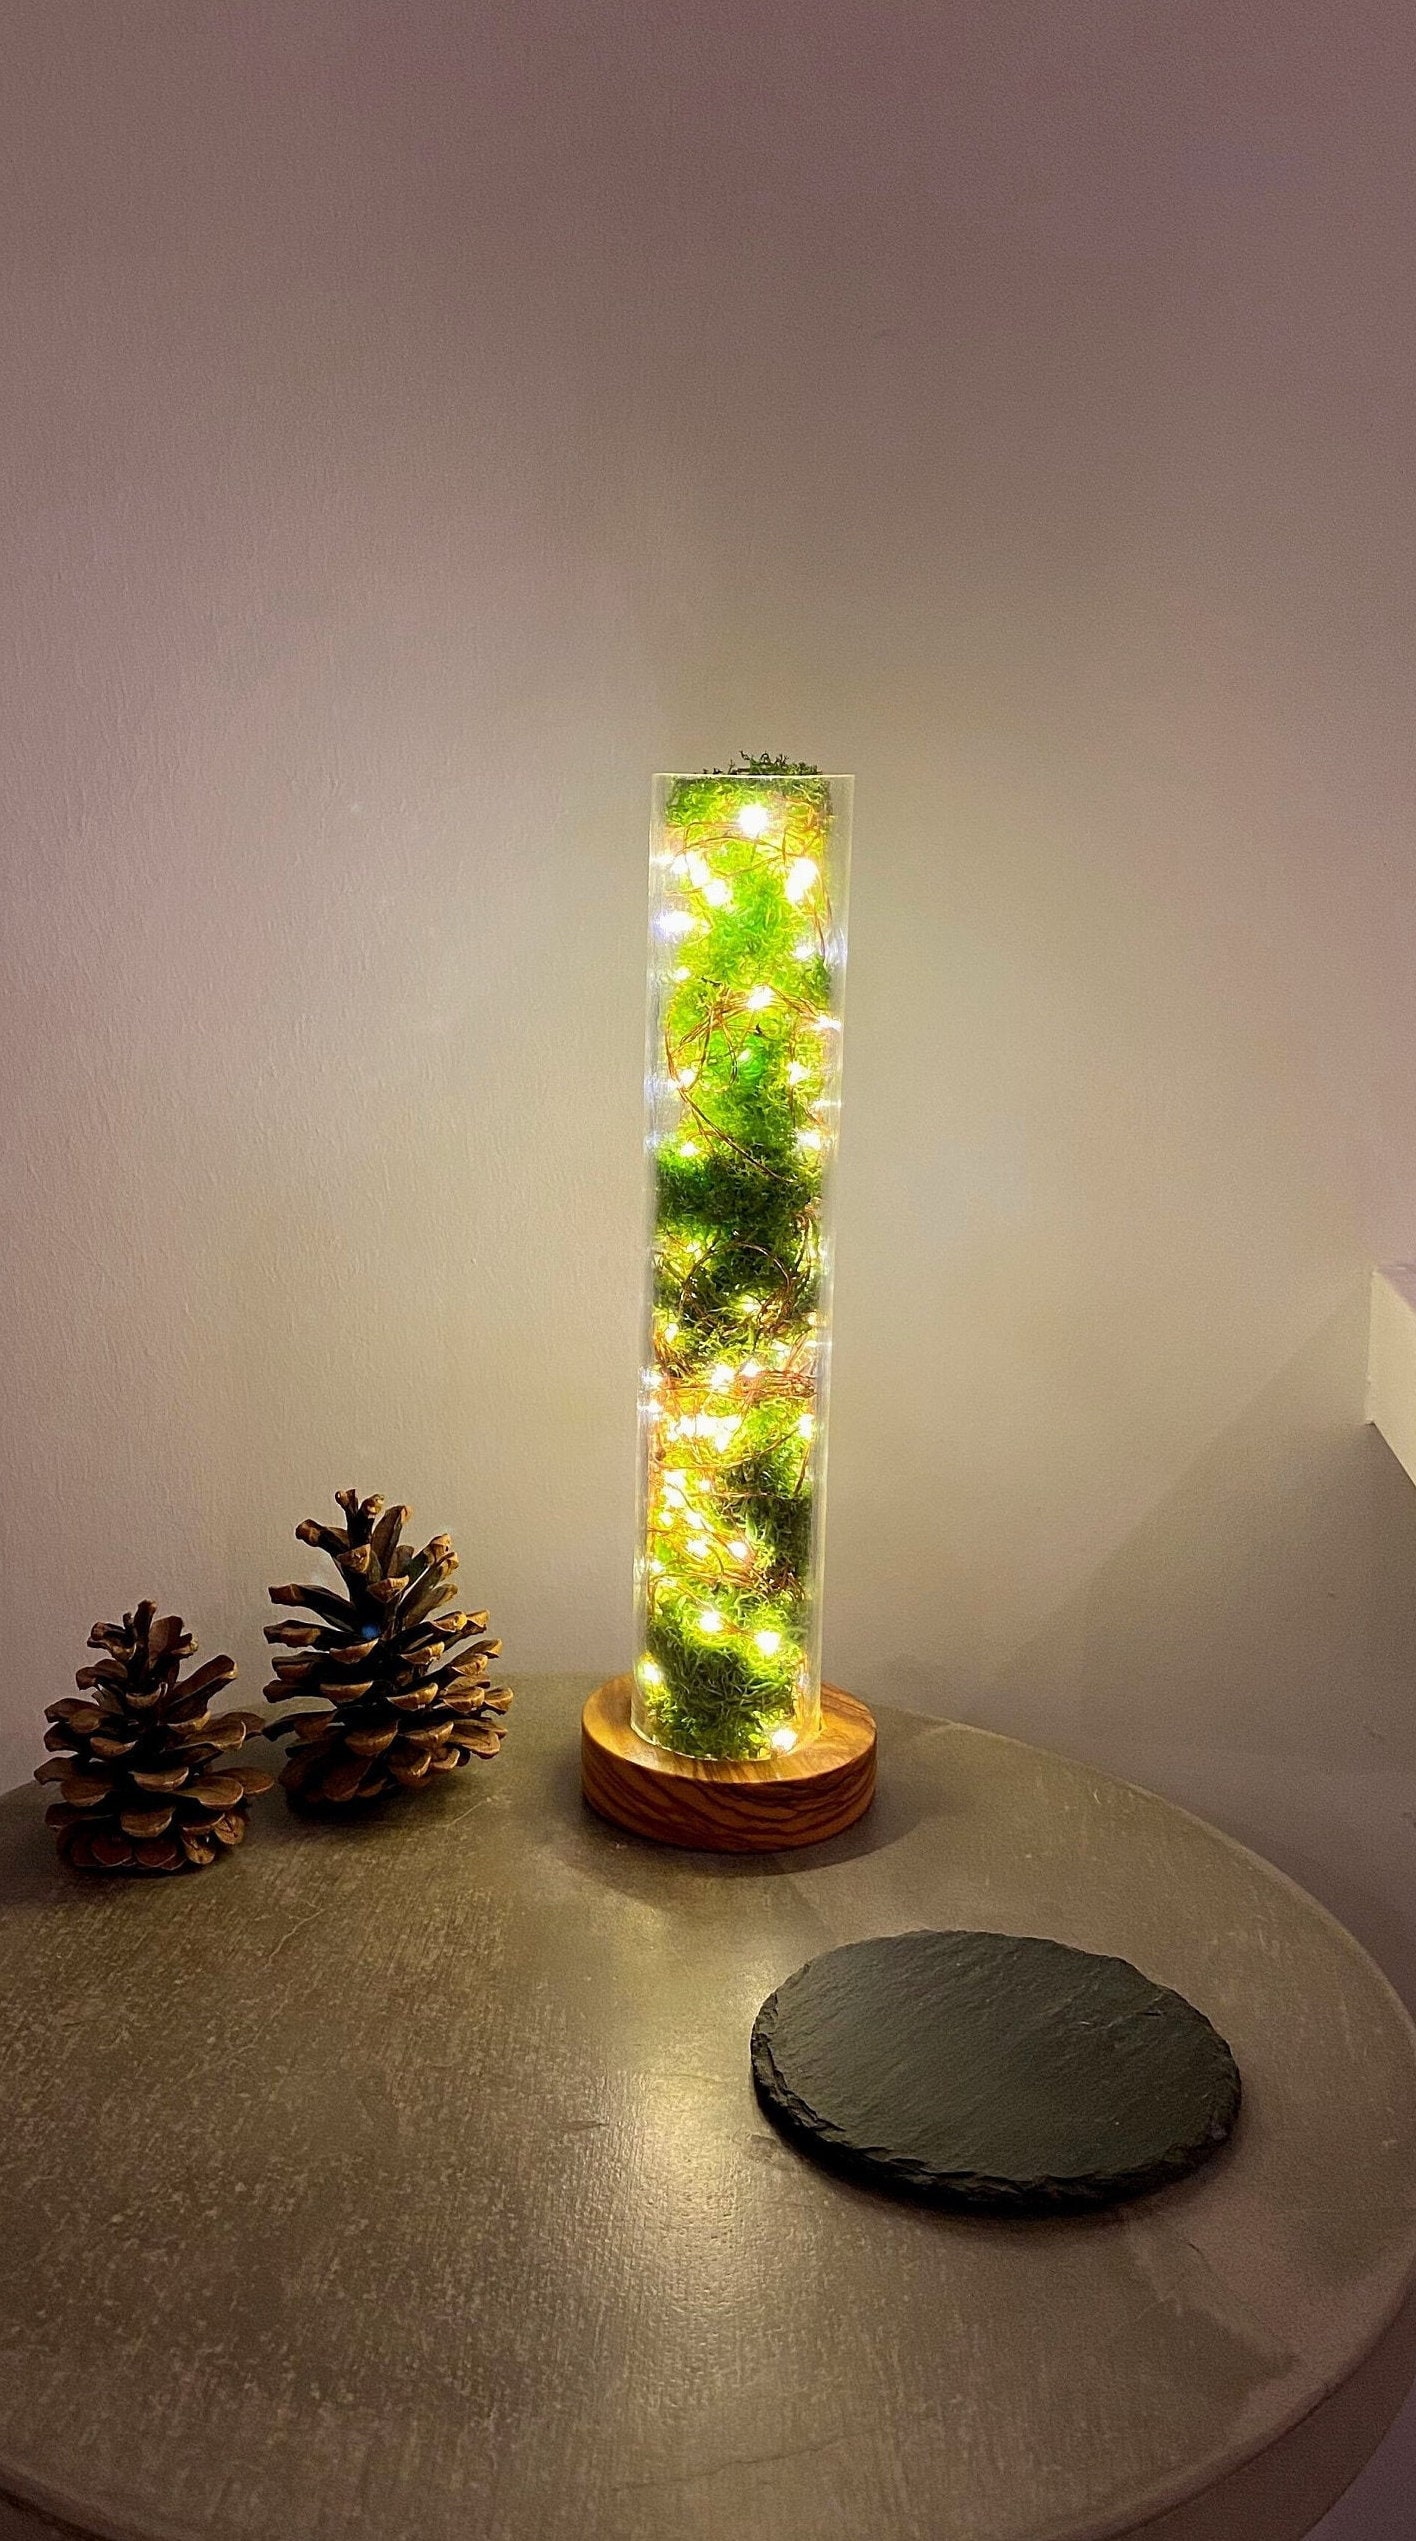 Icelandic moss lamp